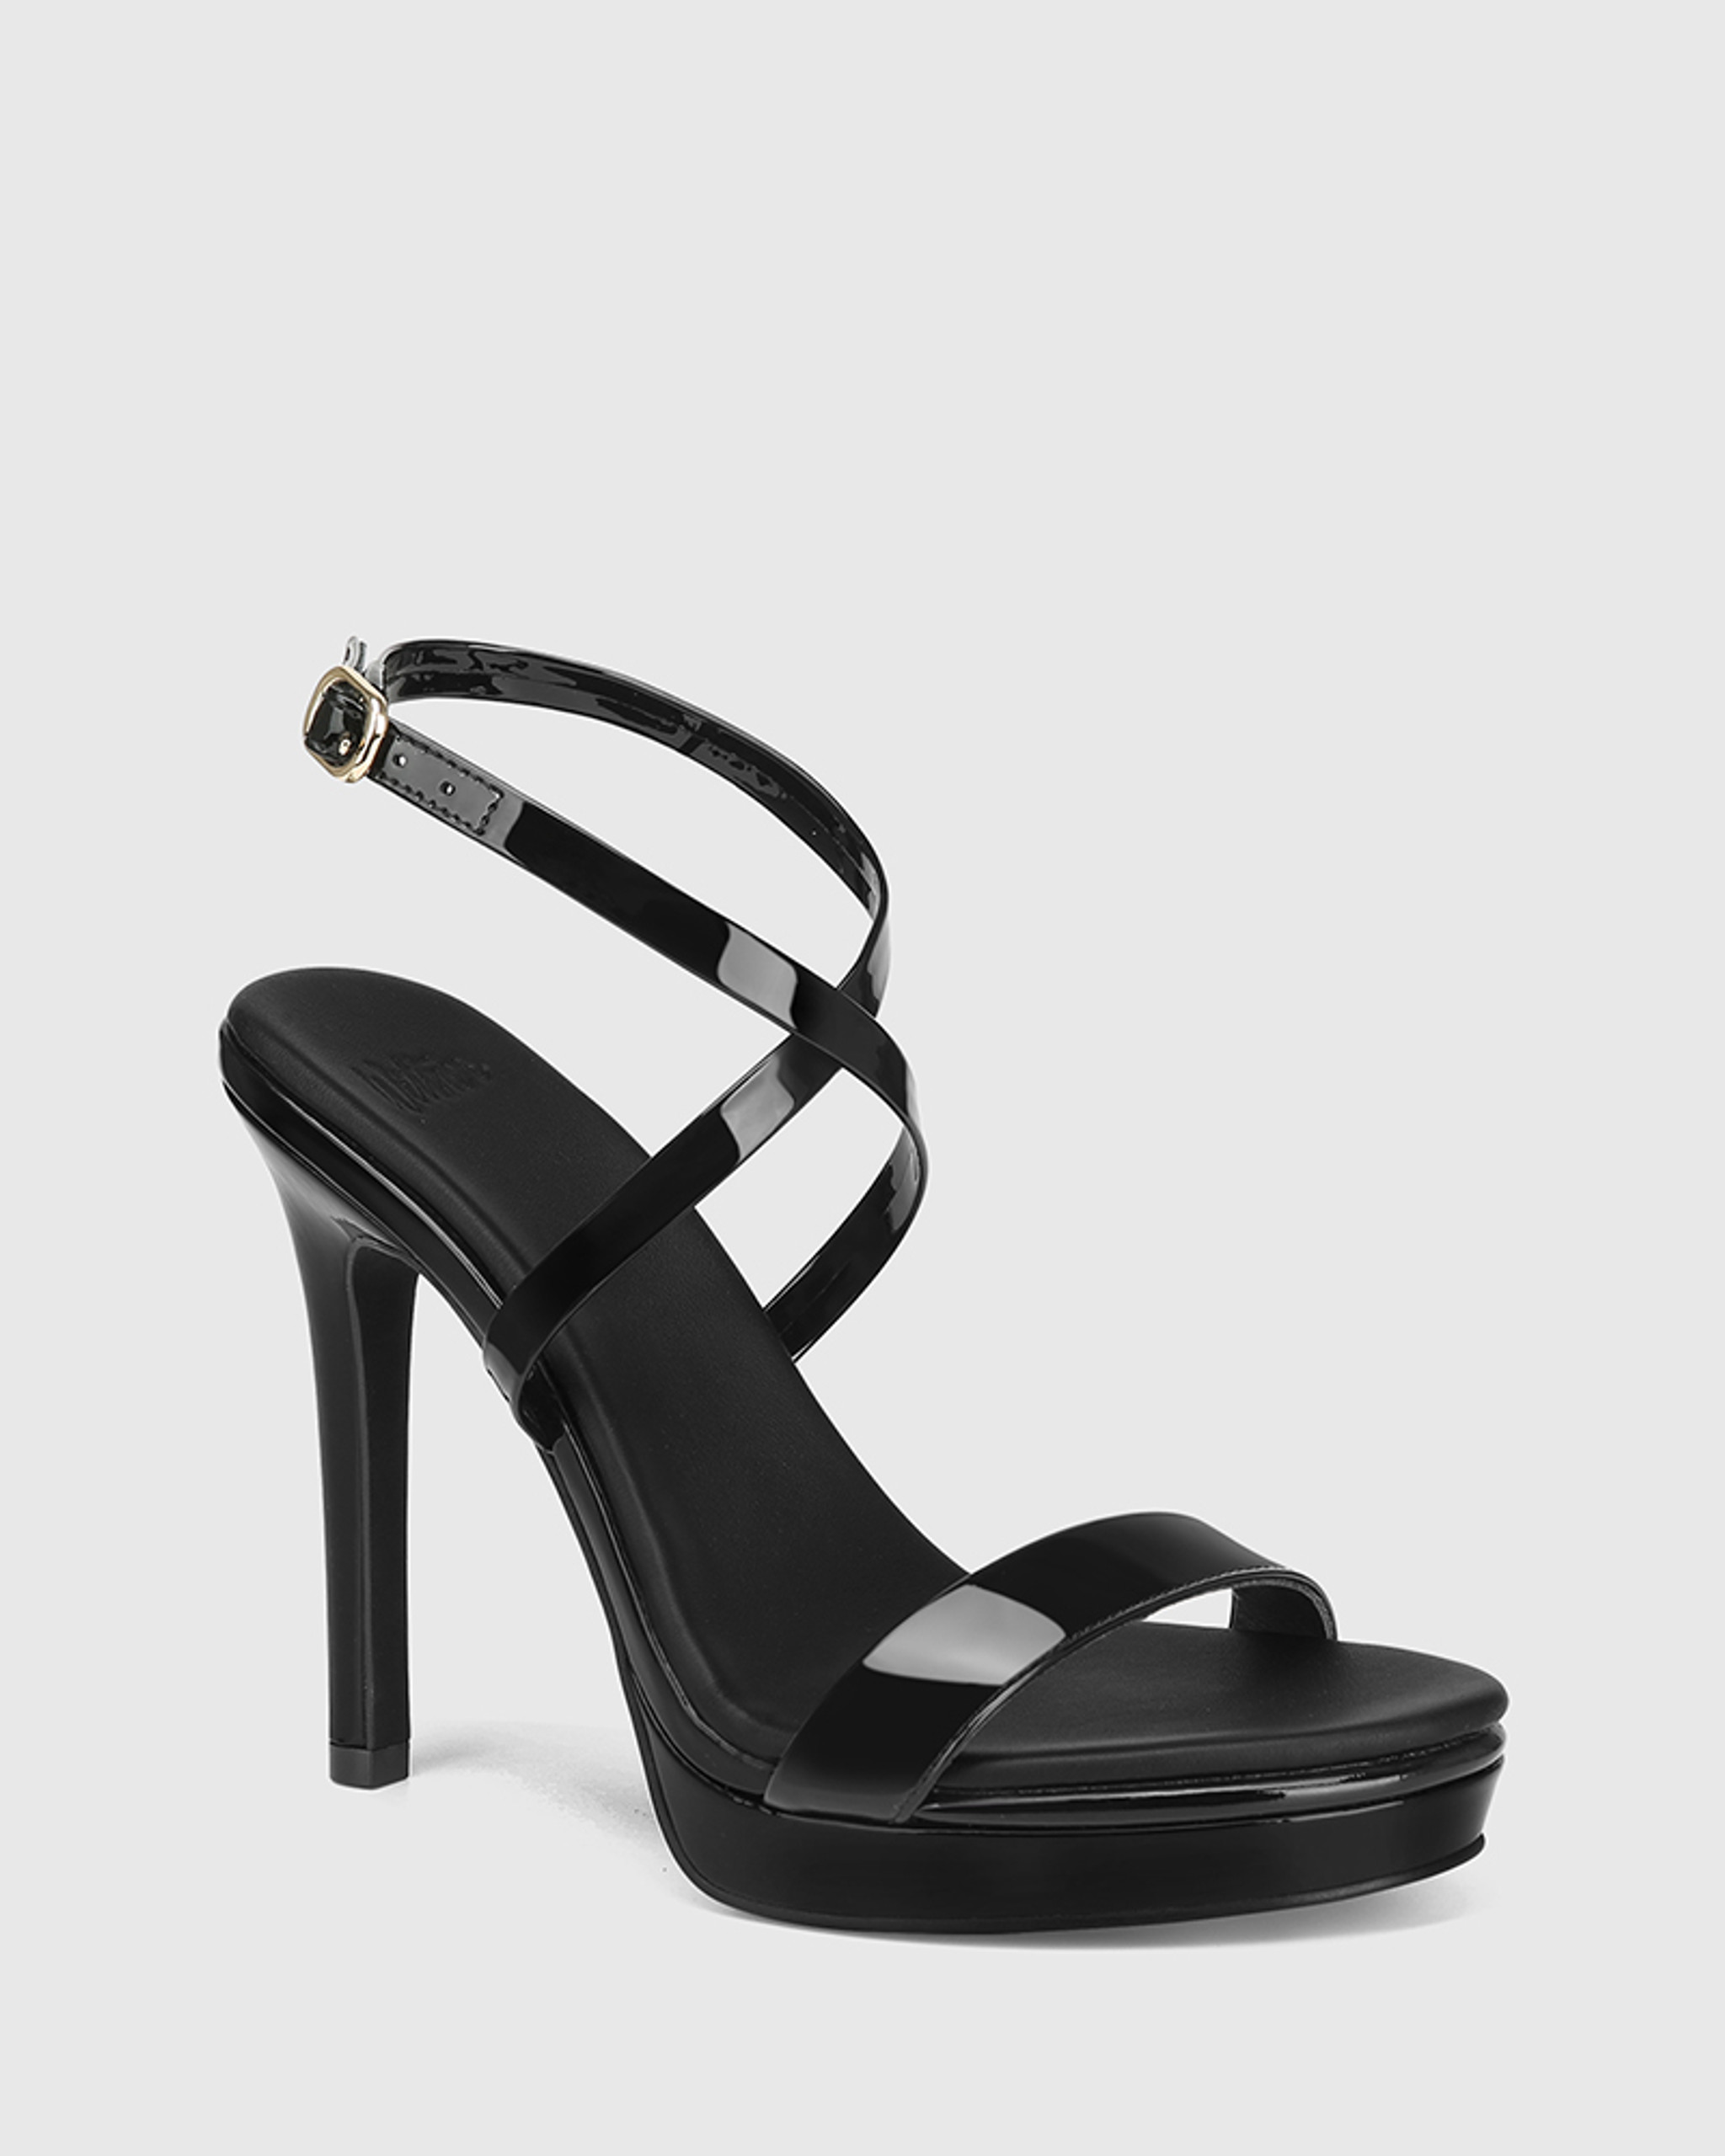 Fioni Texturized Shiny Black High Heel Shoes Strappy Platform Stilettos  Size 8 | Black high heels, Strappy platform sandals, Heels